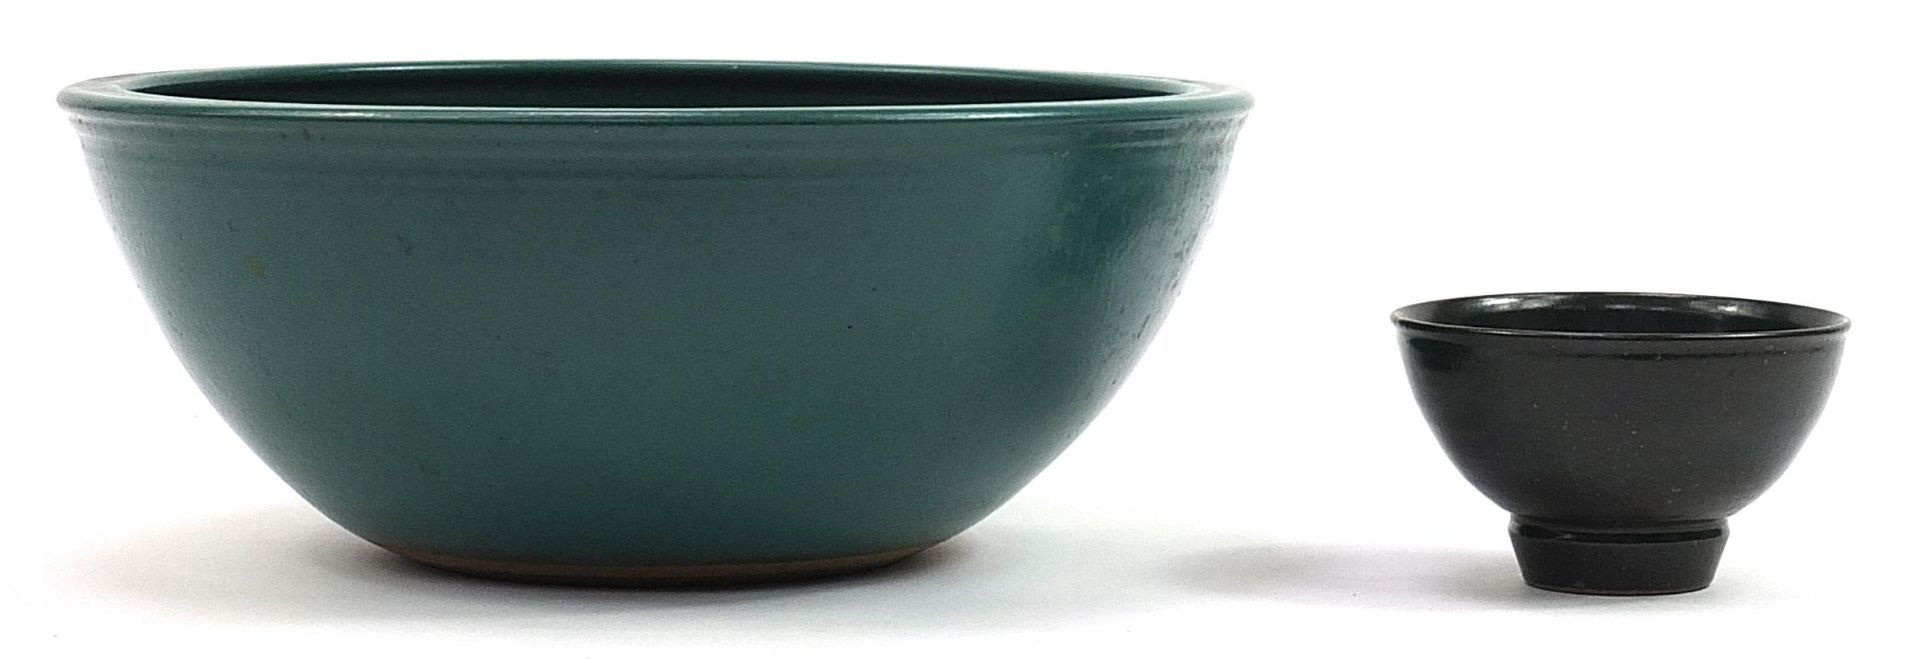 Two David Lloyd Jones studio pottery bowls having green glazes, the largest 39.5cm in diameter